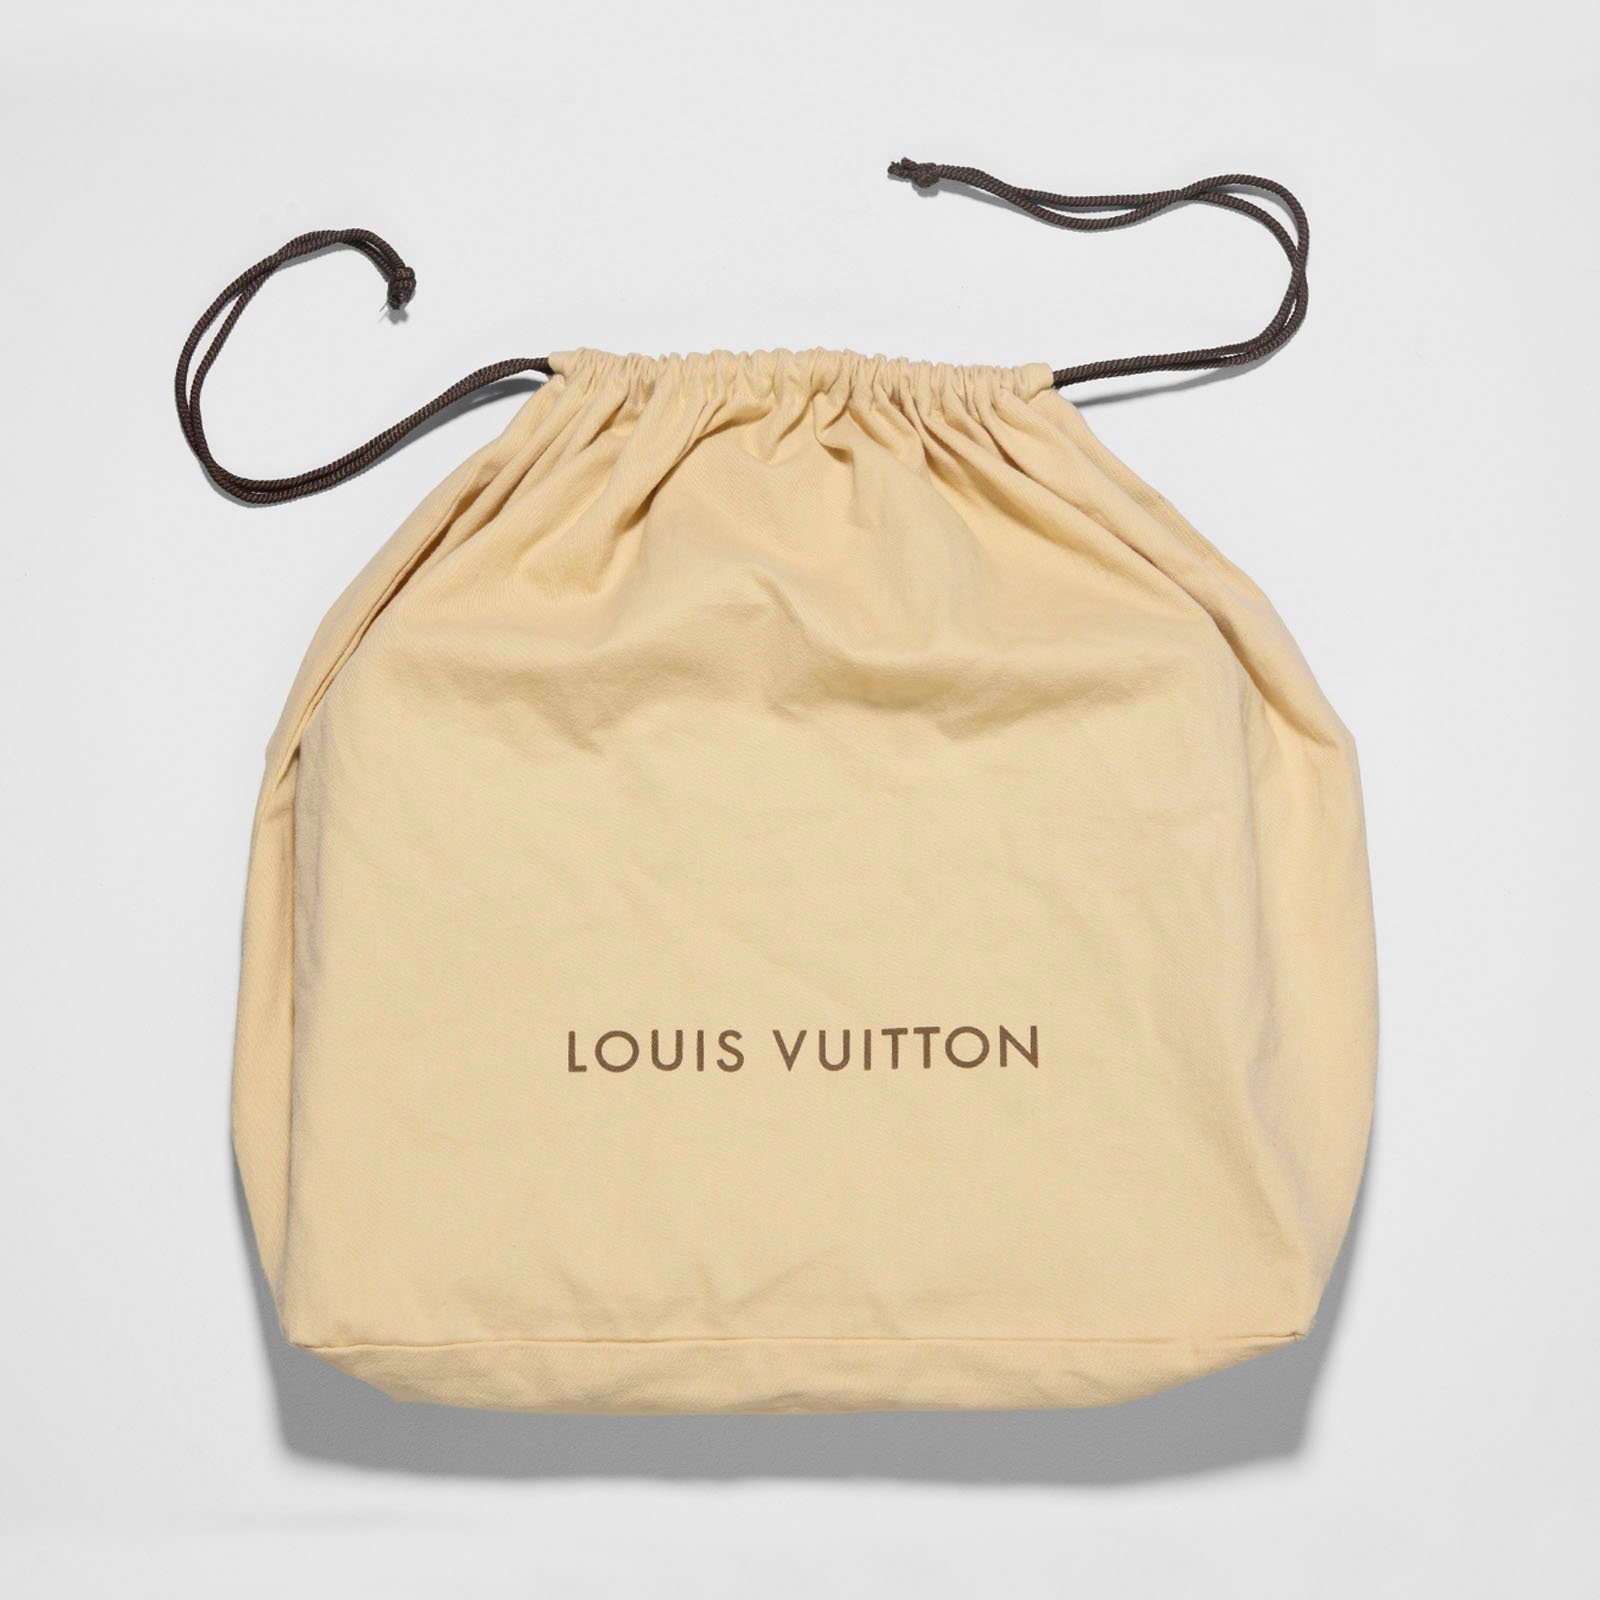 Louis Vuitton: Our view  – bulangandsons-magazine